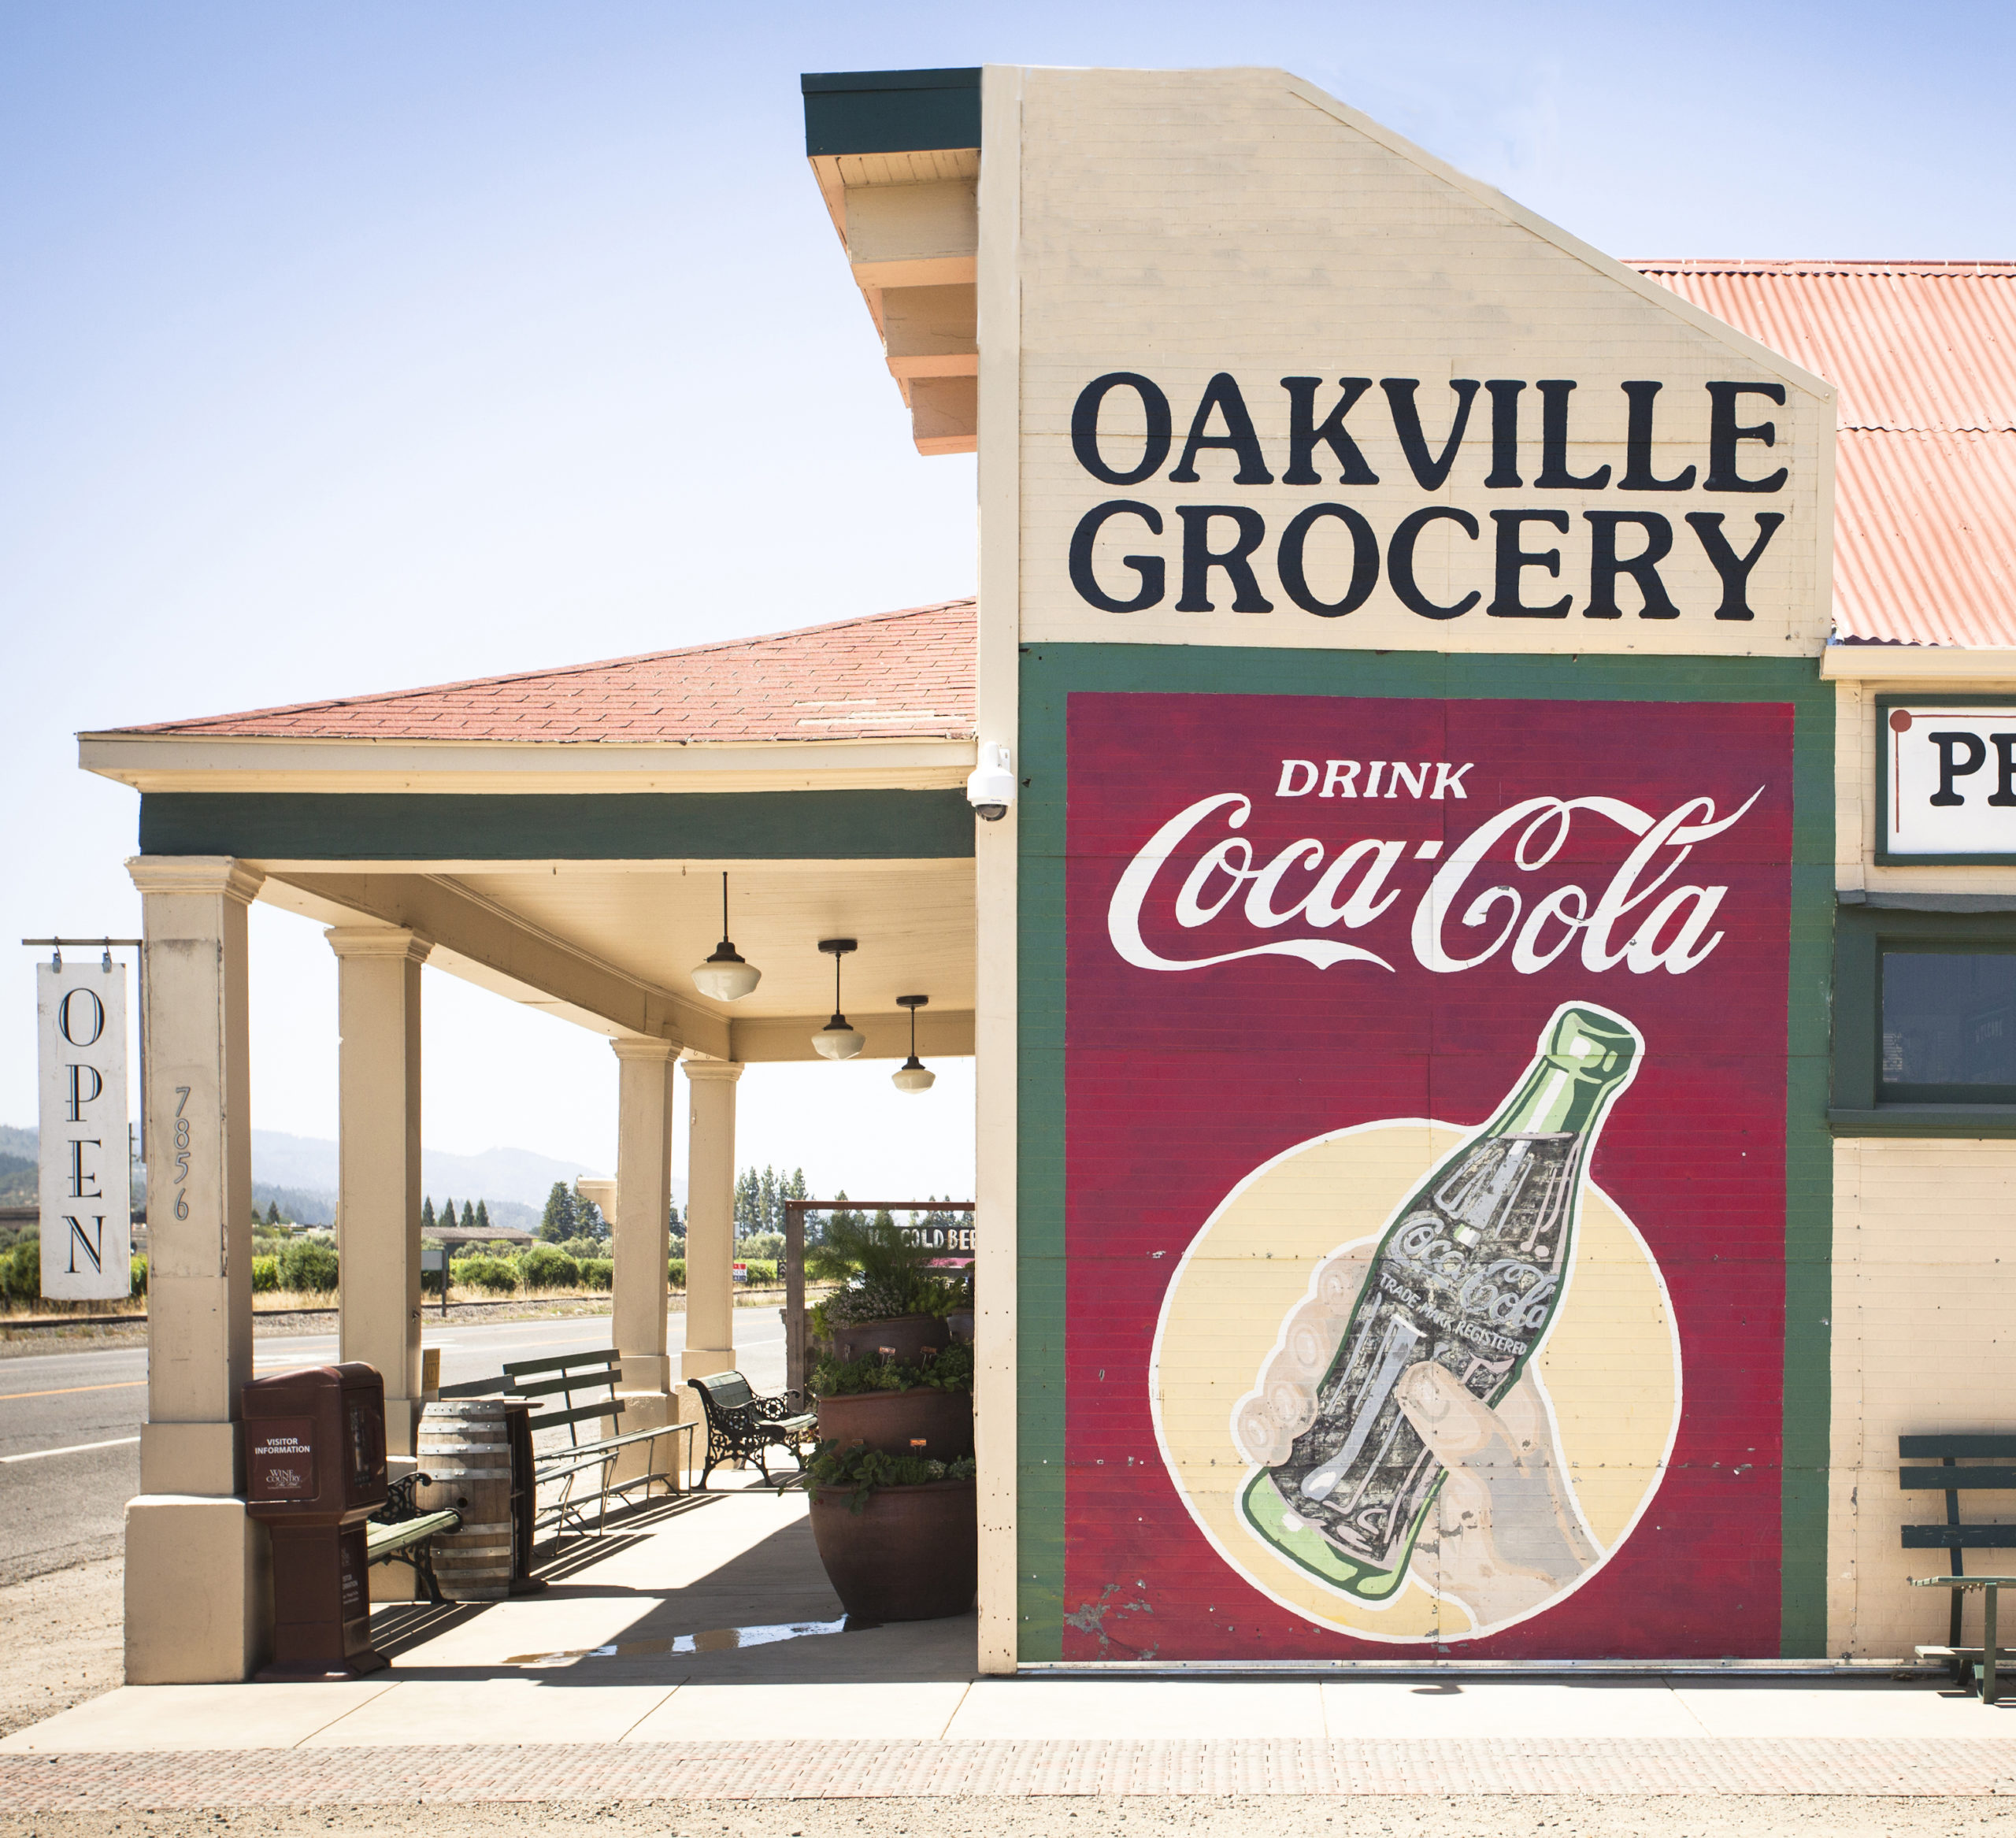 Oakville Grocery & Wine Merchant: California’s Oldest Grocery Store